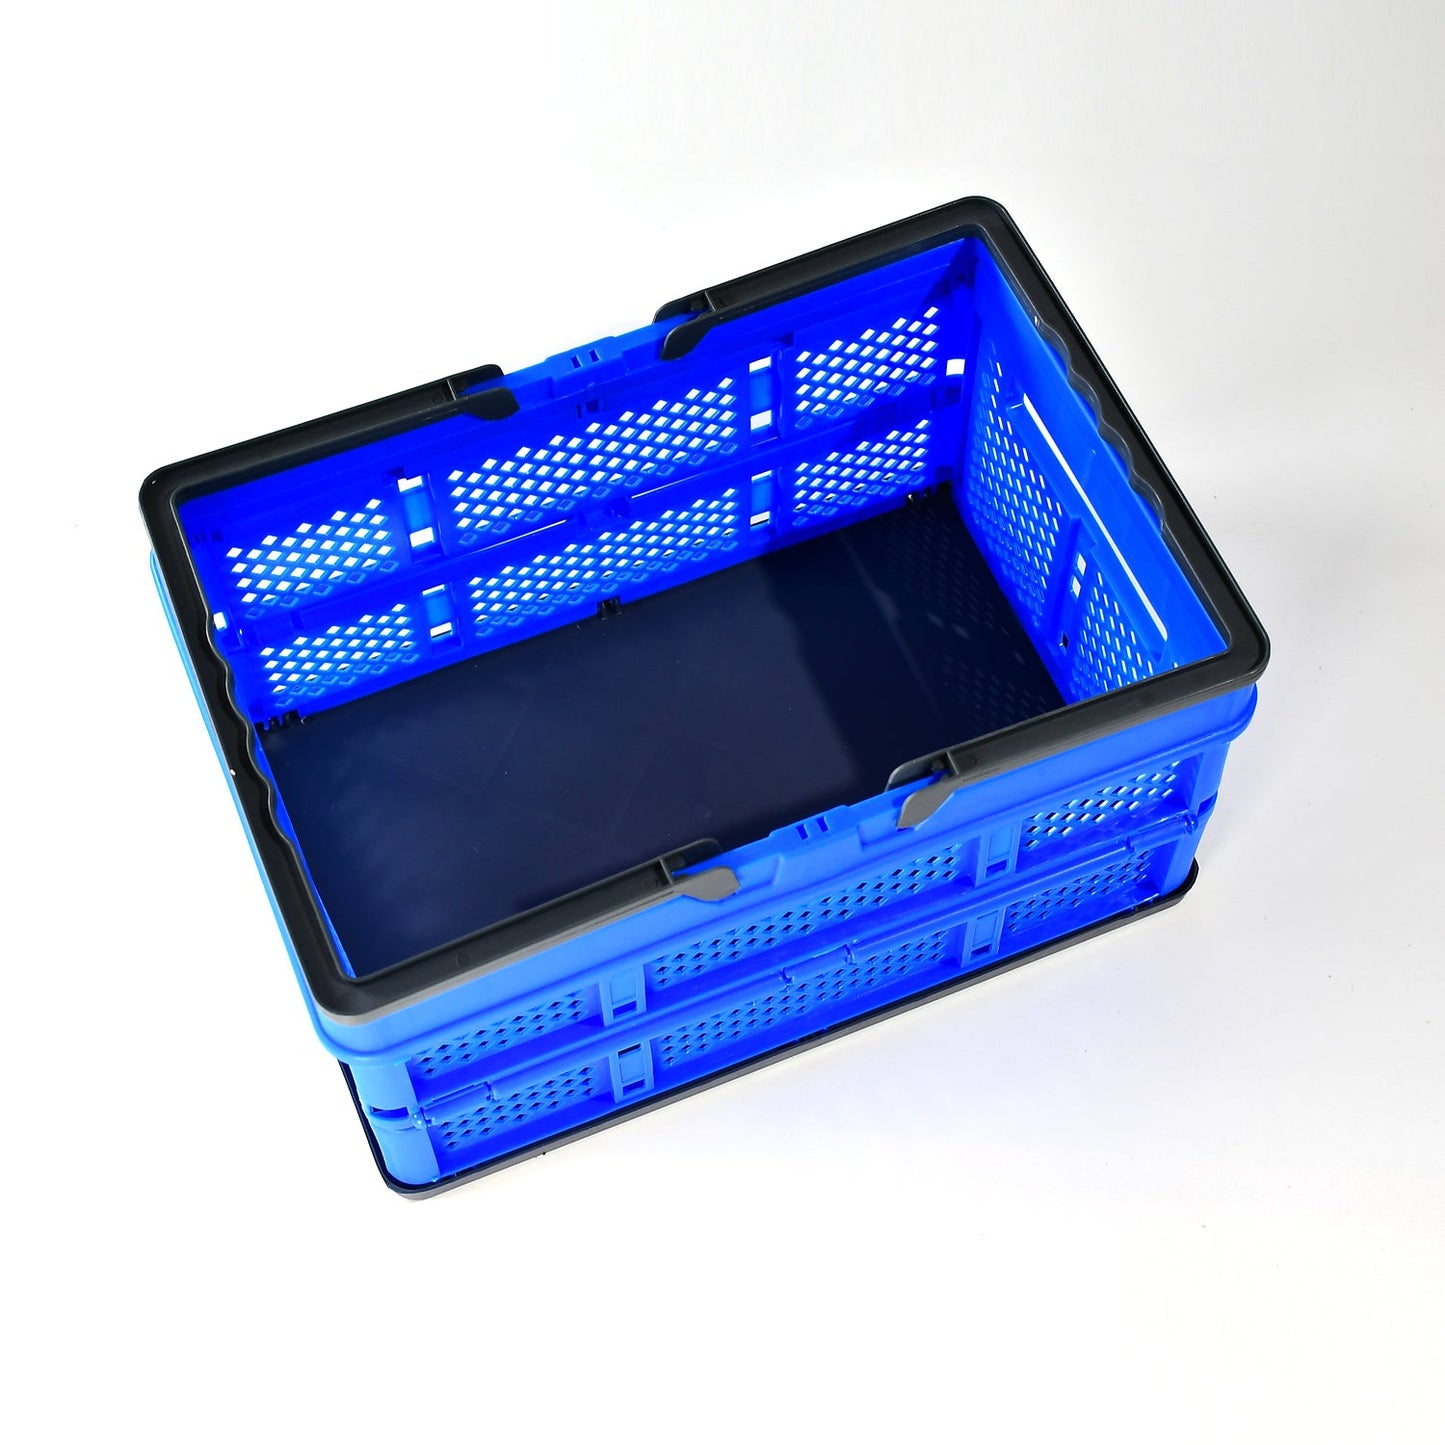 Multipurpose Foldable Portable Stackable Storage Basket